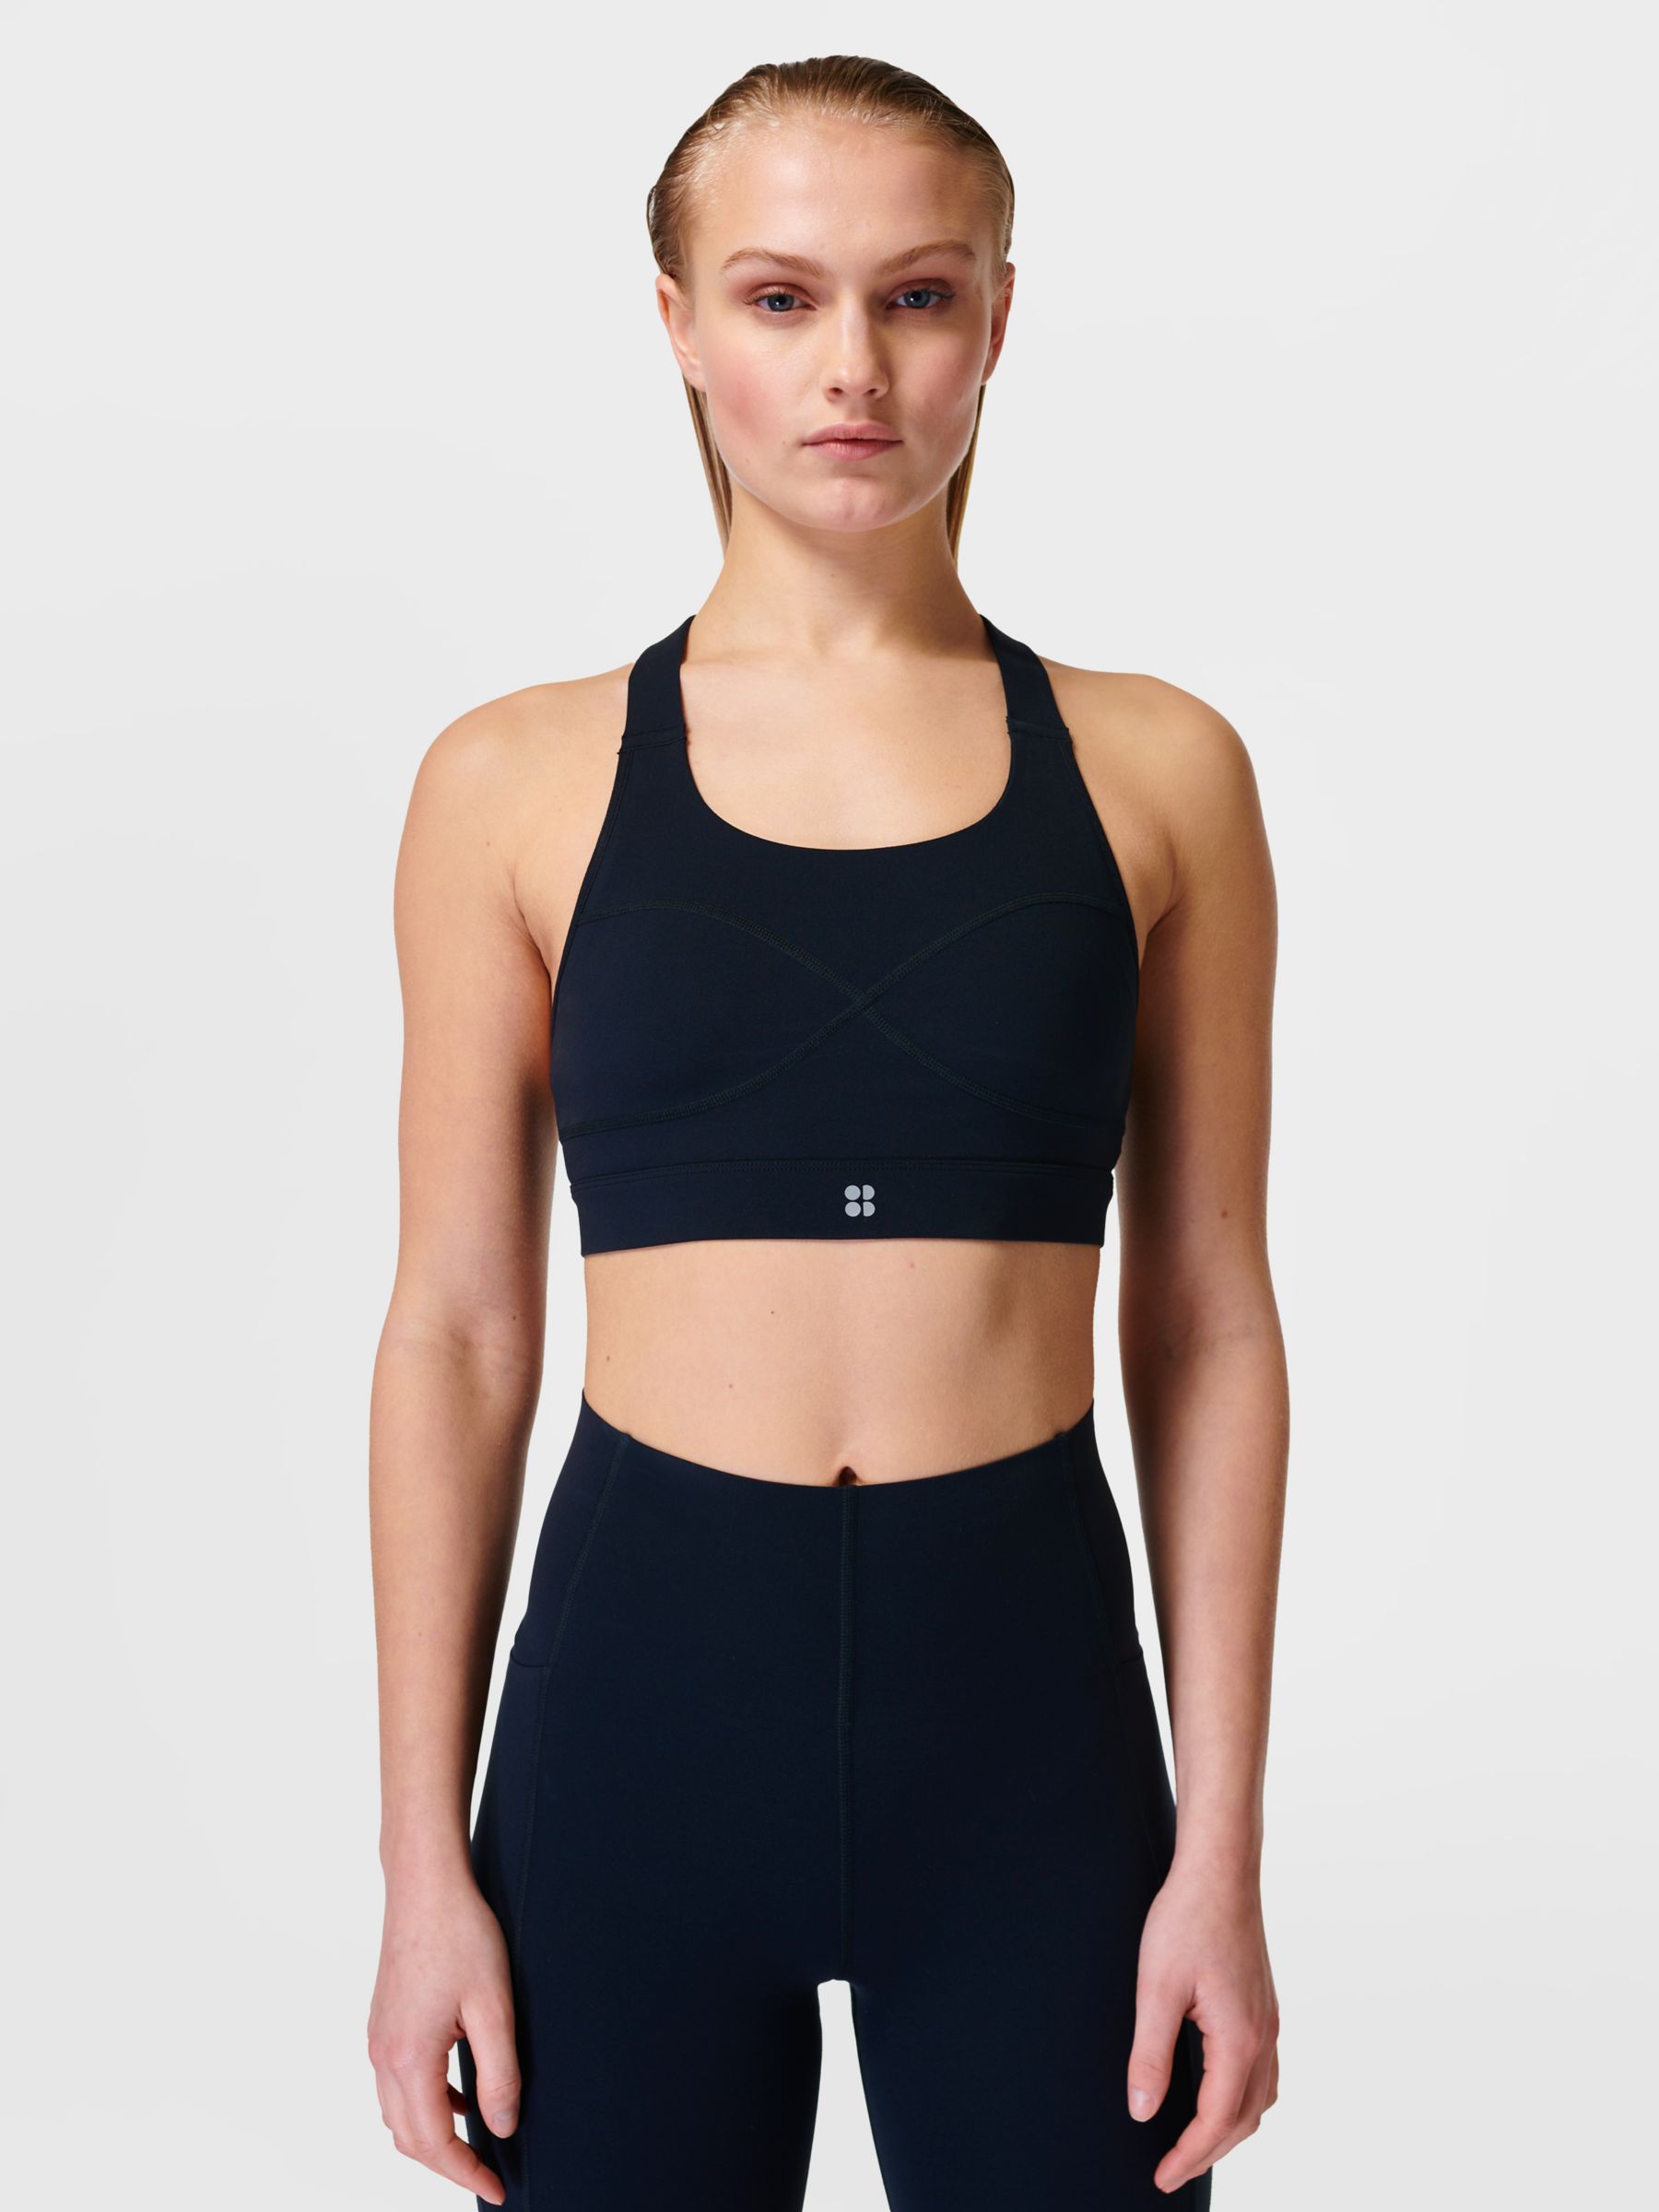 Shop Slim Fit Printed Medium Support Sports Bra with Adjustable